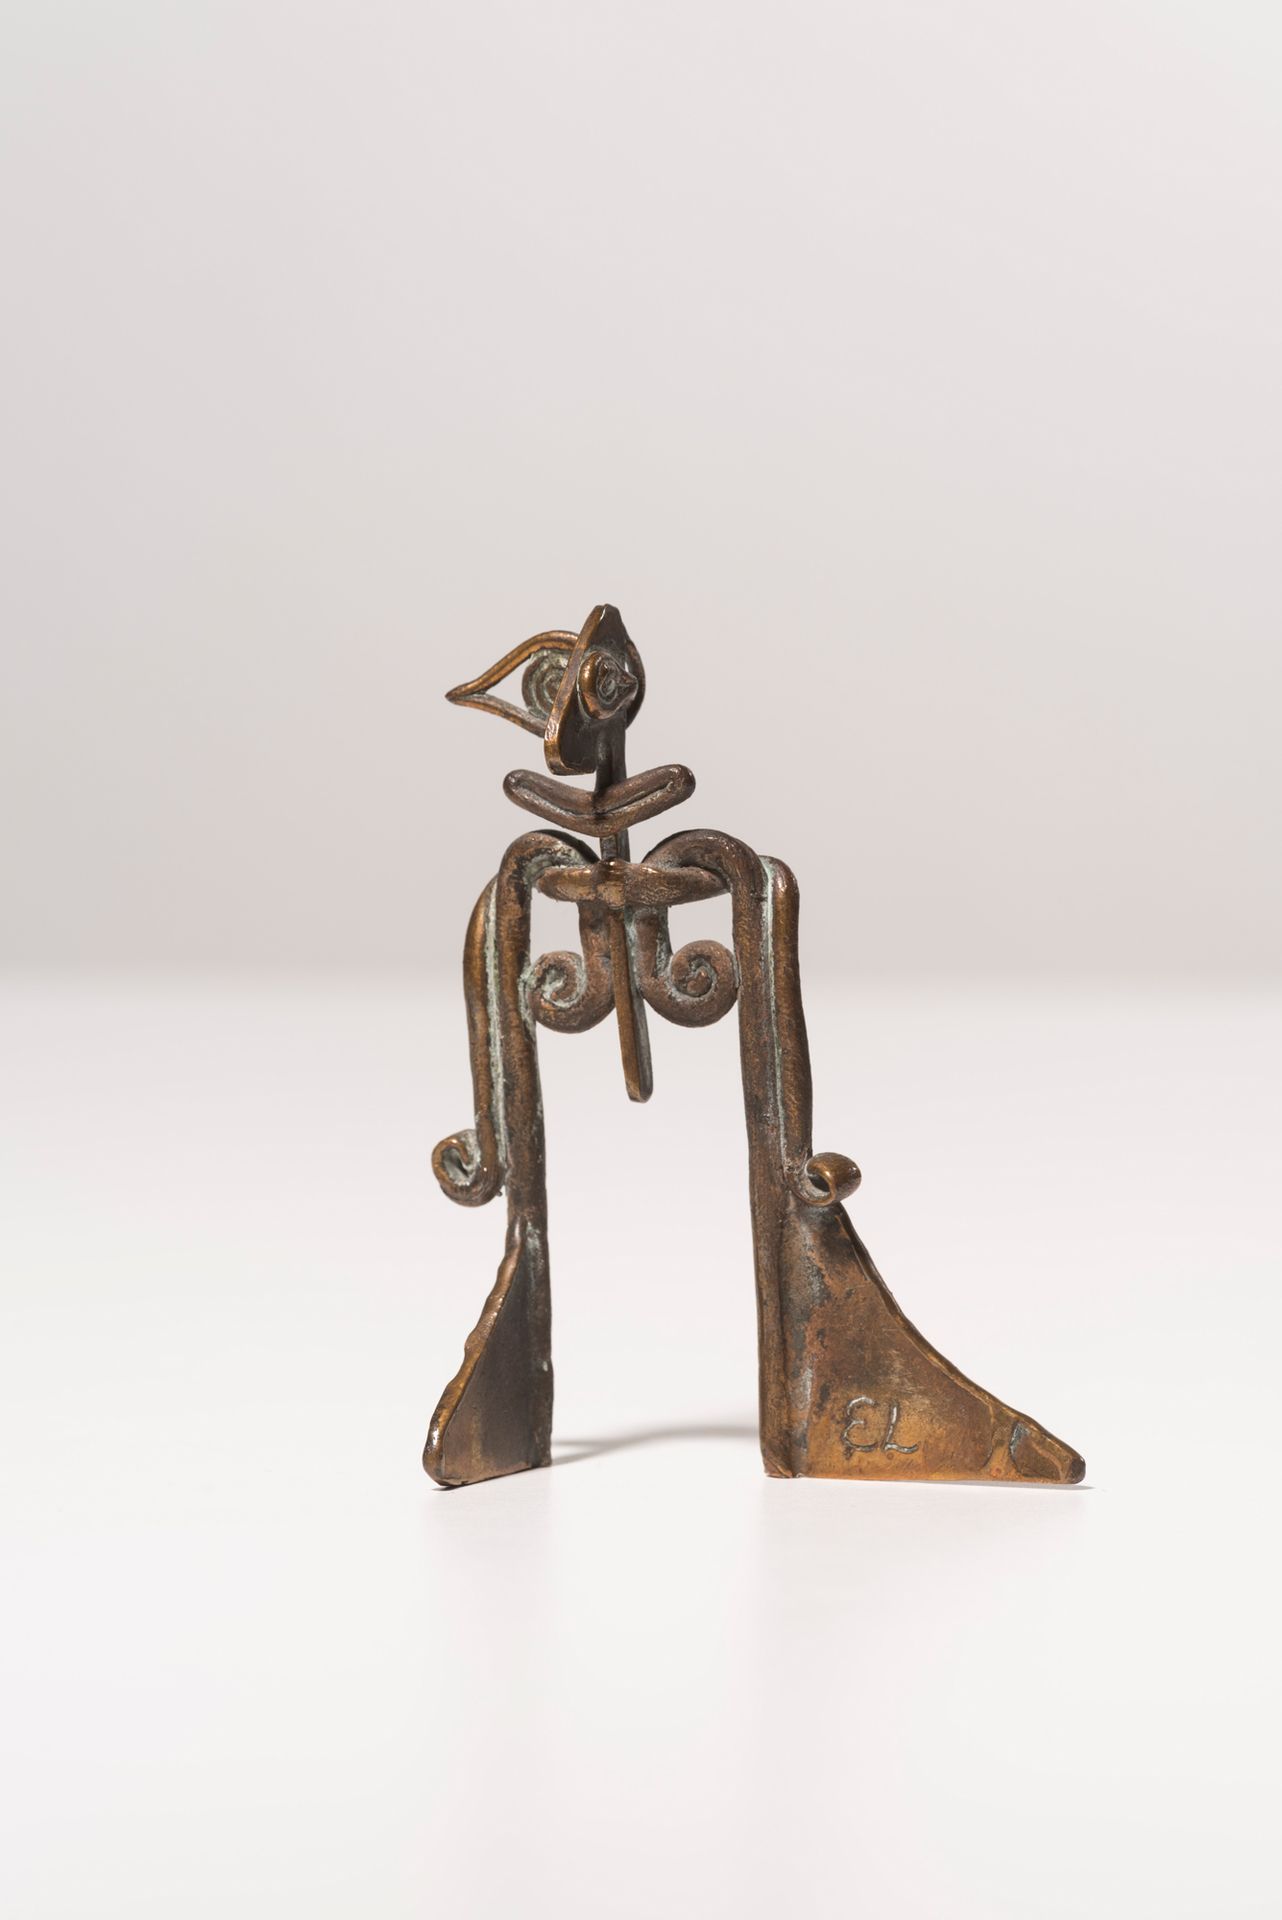 OLIVIER LELOUP (1951-2000) Hommage à Picasso.
Bronze. Monogrammé. 
Brons. Een mo&hellip;